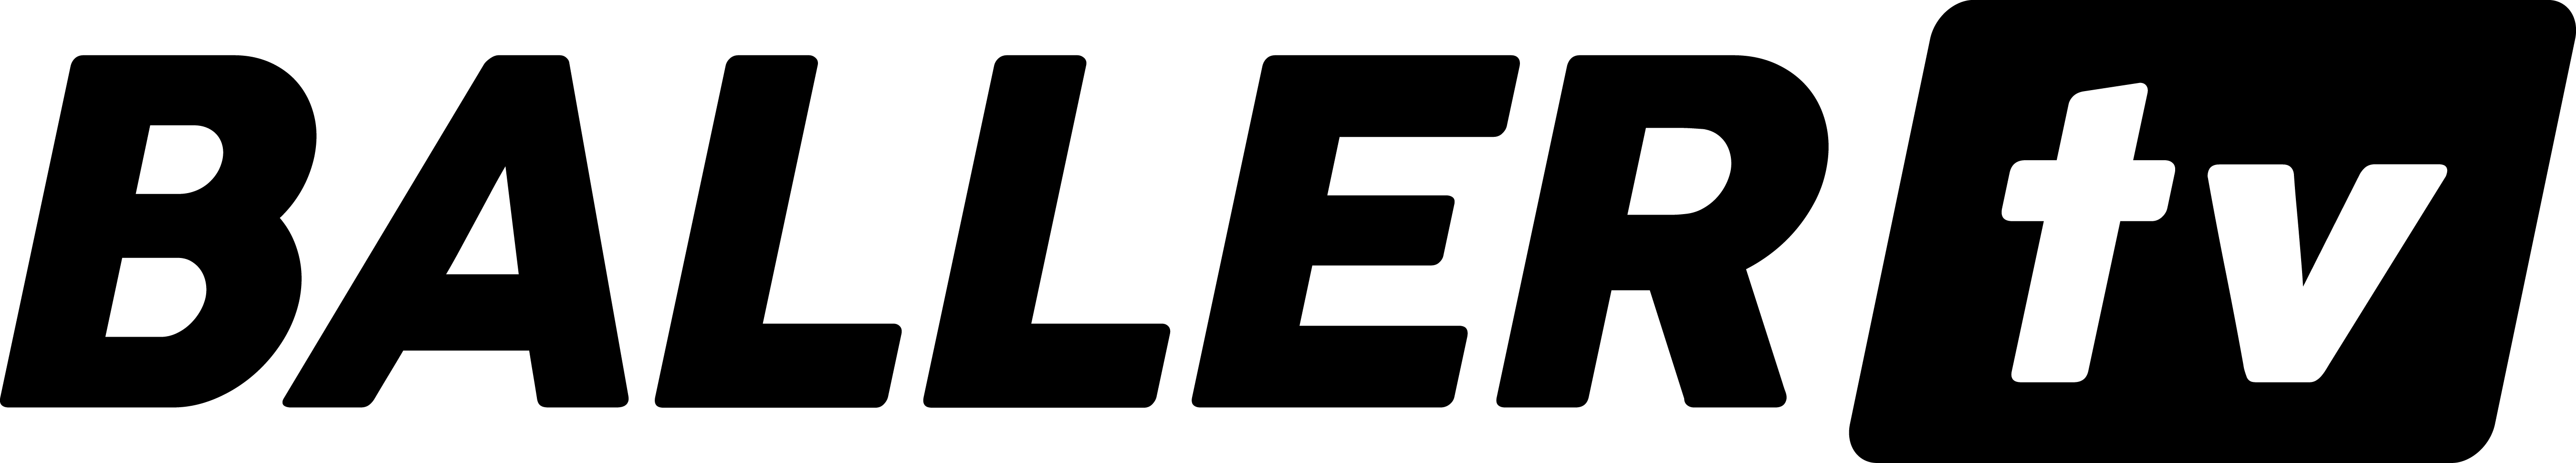 BallerTV-Logo-2020-Black-RGB (003)